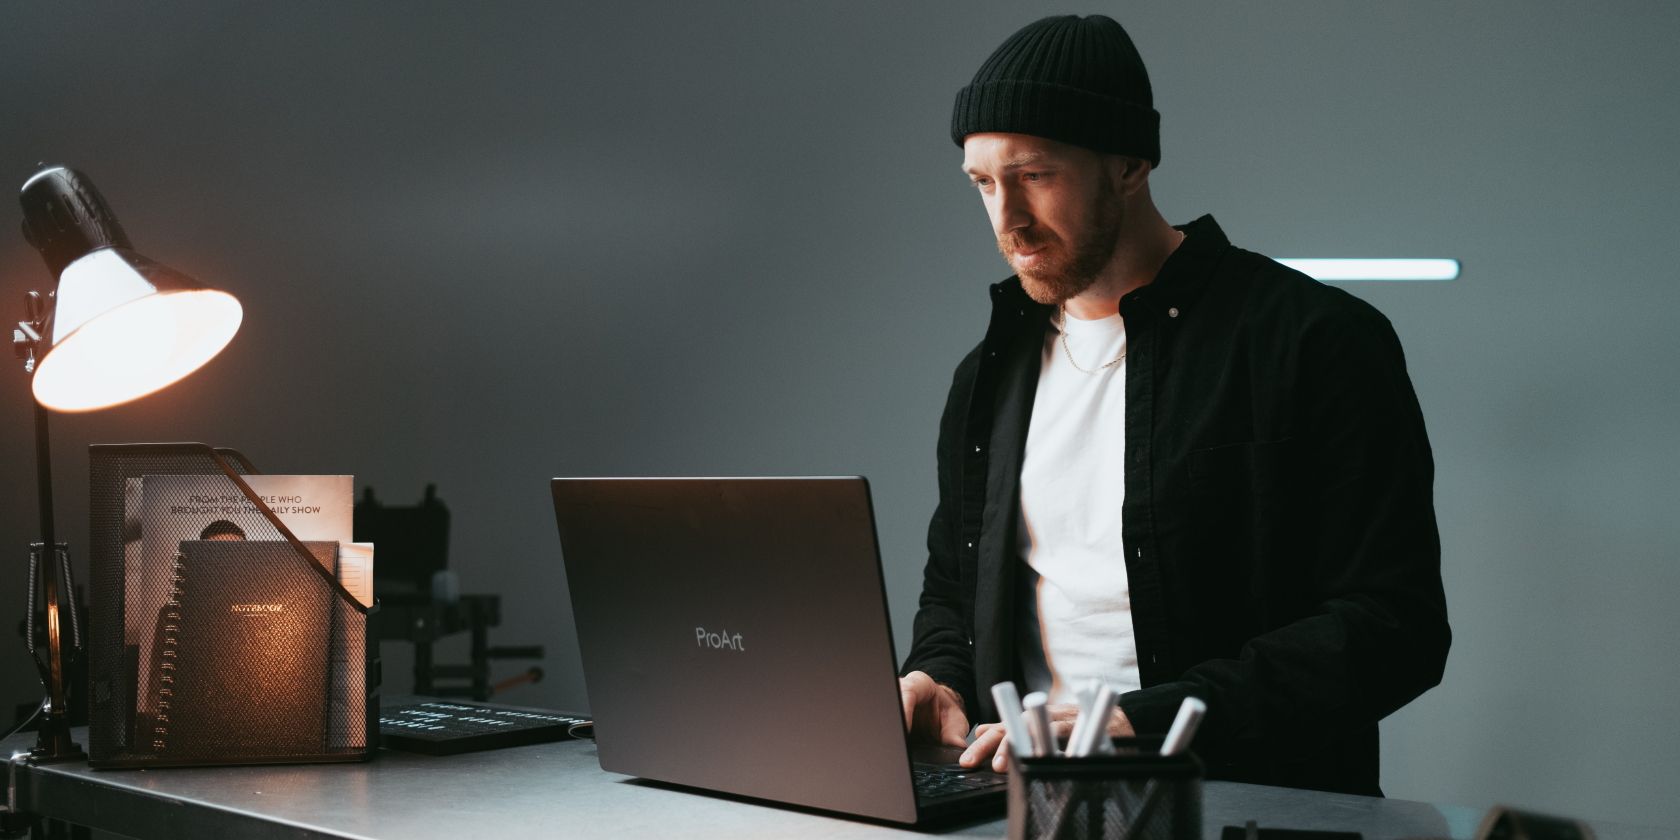 Man Editing On Laptop